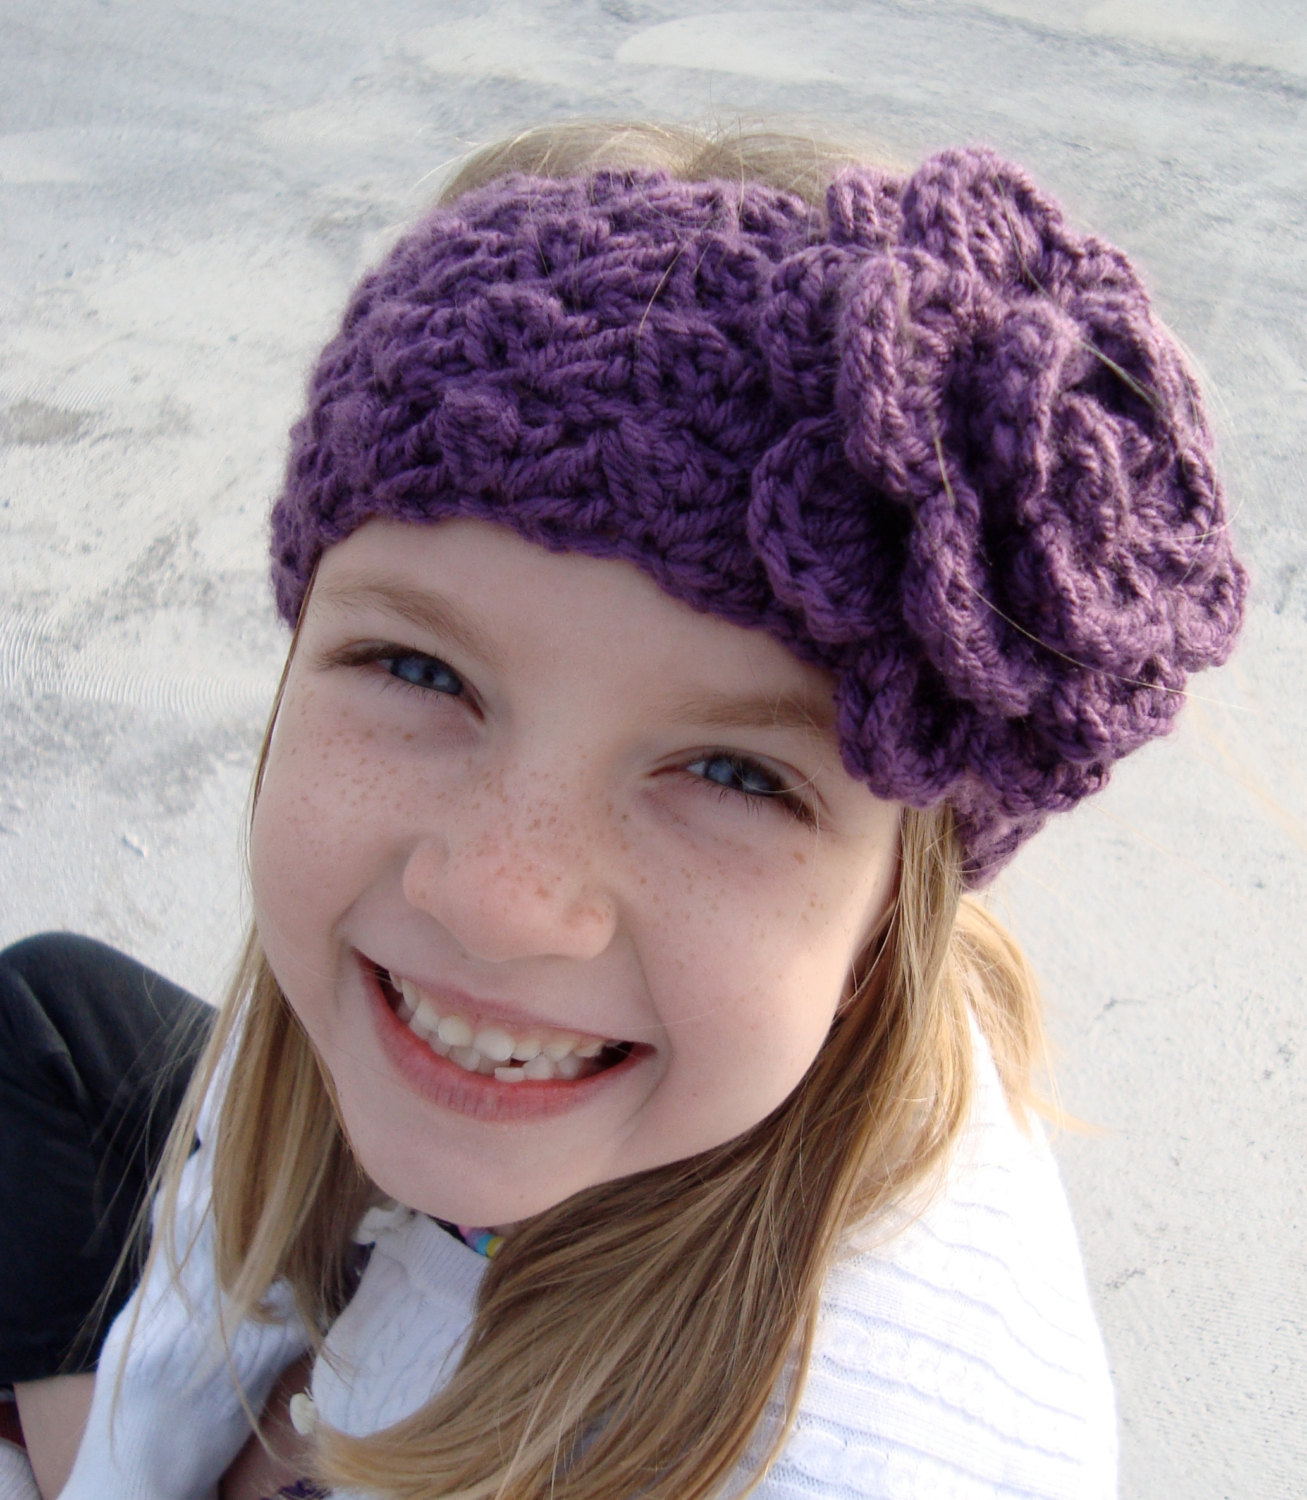 Crochet Headband With Flower Pattern Girls Crochet Headbands For All Crochet And Knitting Patterns 2019